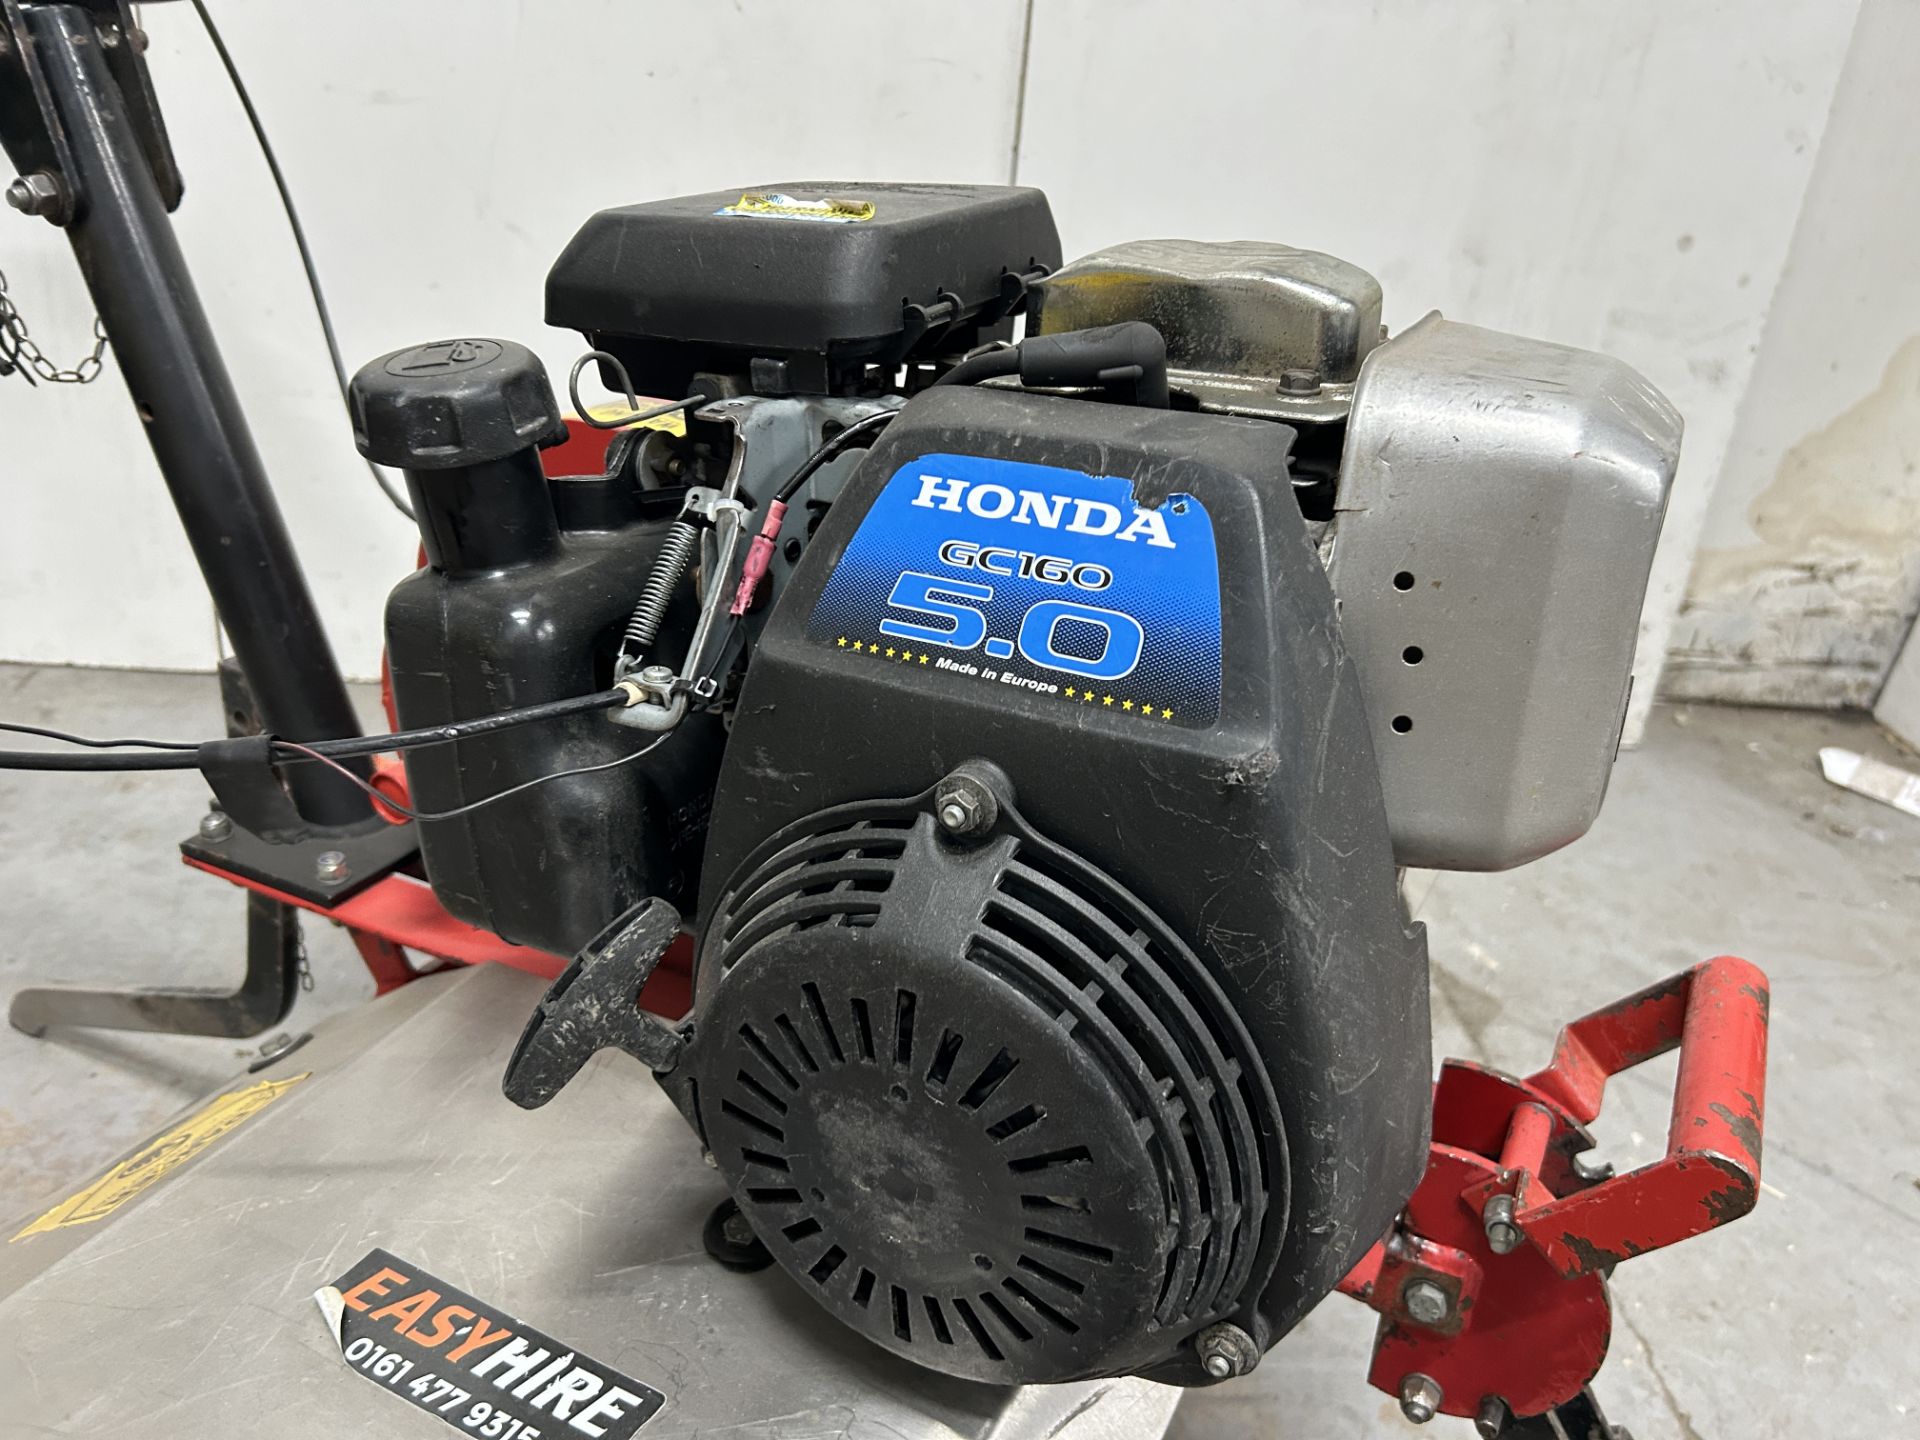 Industrial Tiller/Cultivator w/ Honda GC160 Petrol Engine - Bild 3 aus 6